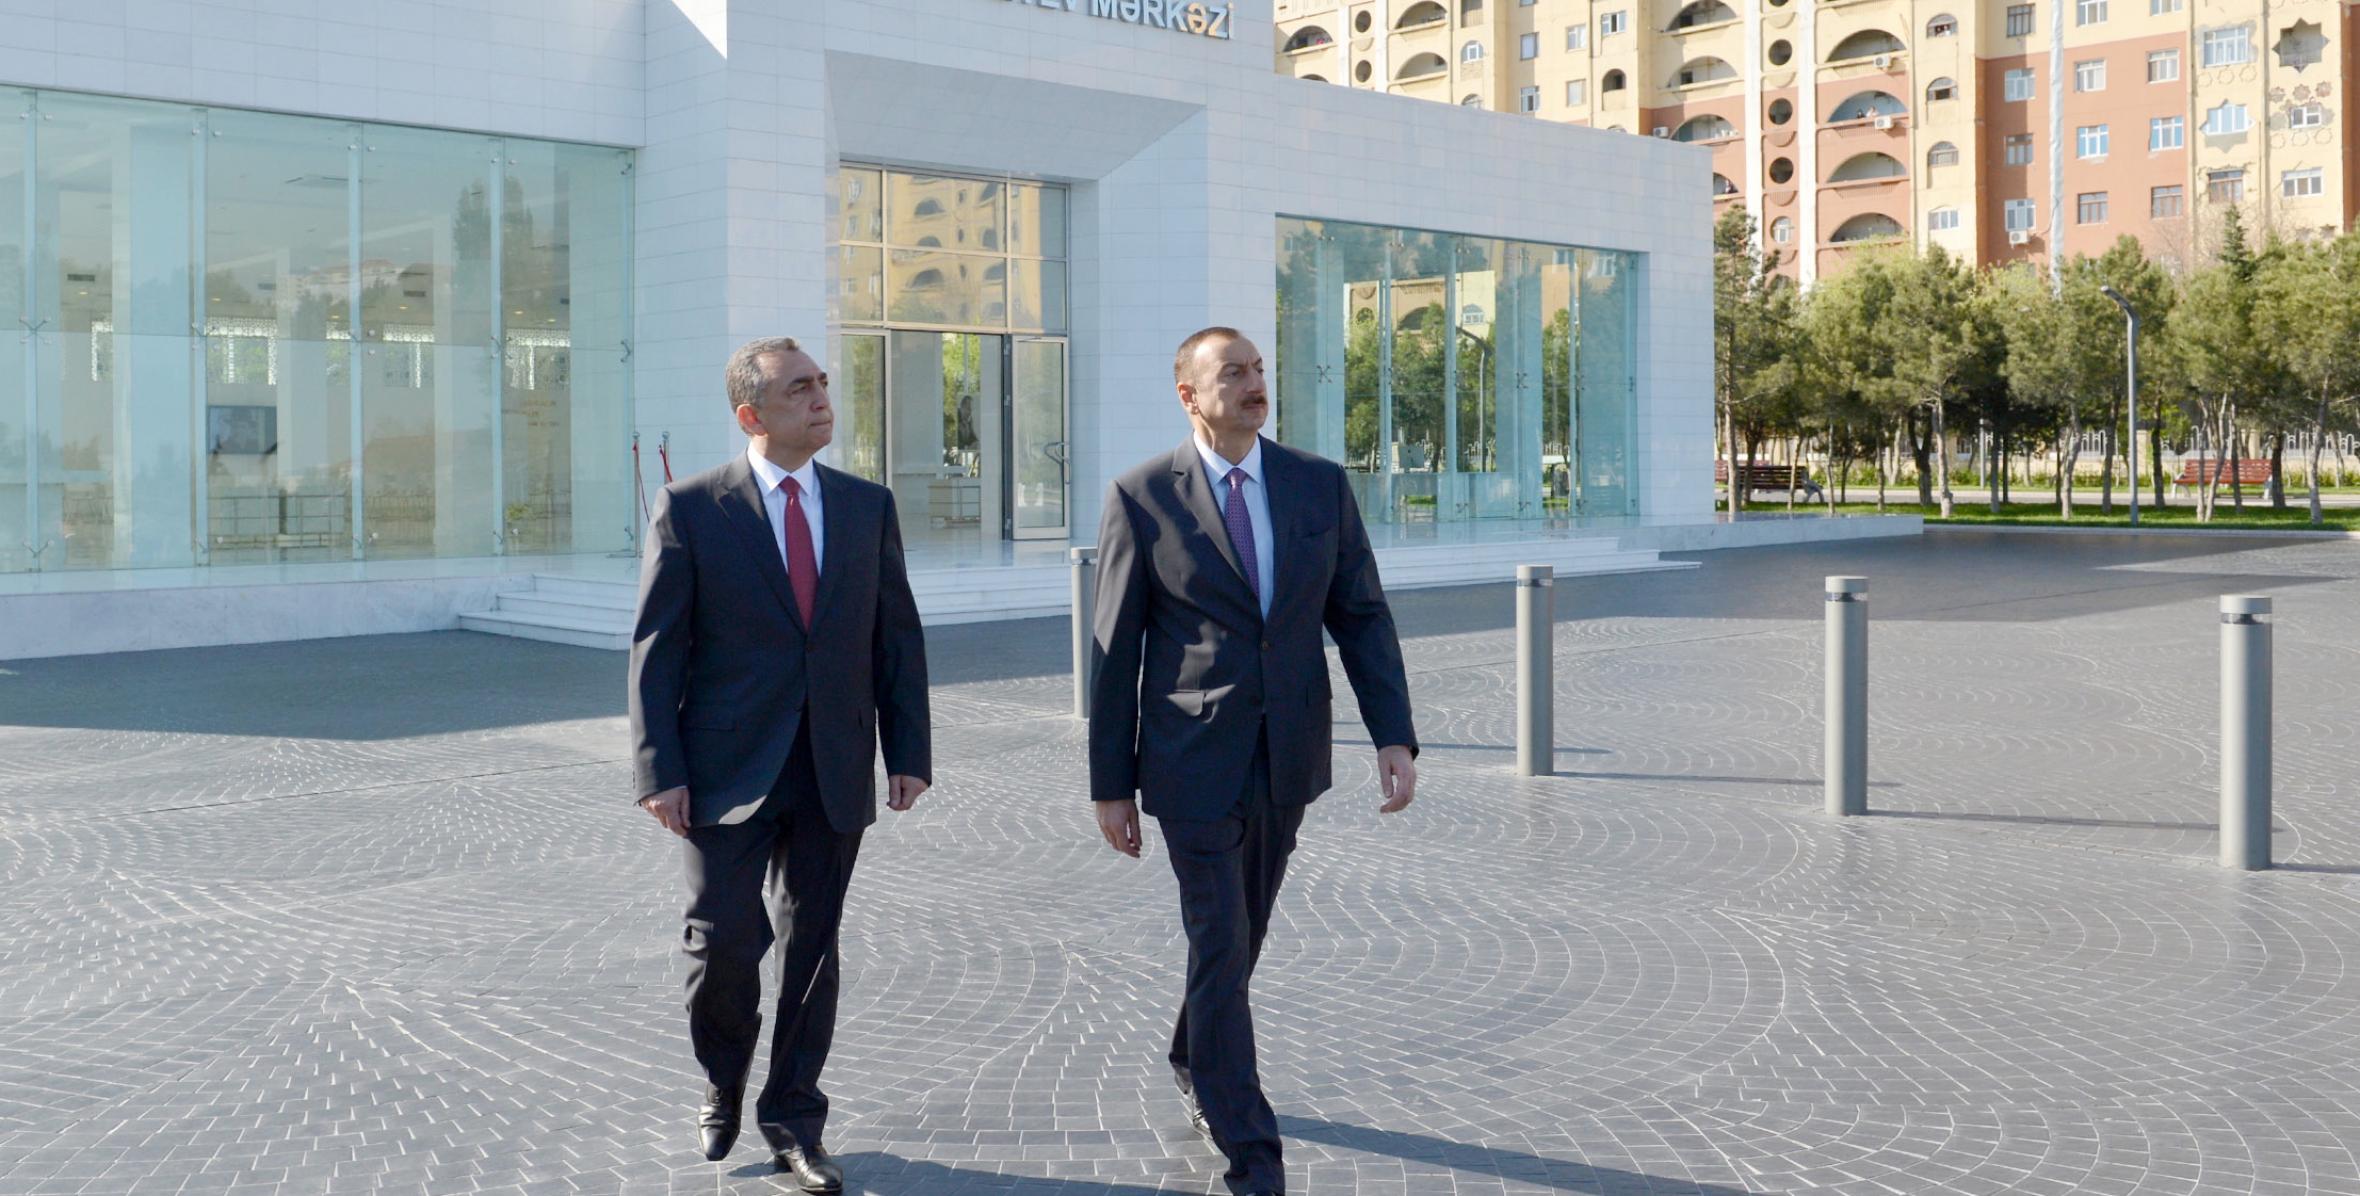 Ilham Aliyev attended the opening of the Heydar Aliyev Center in Sumgayit